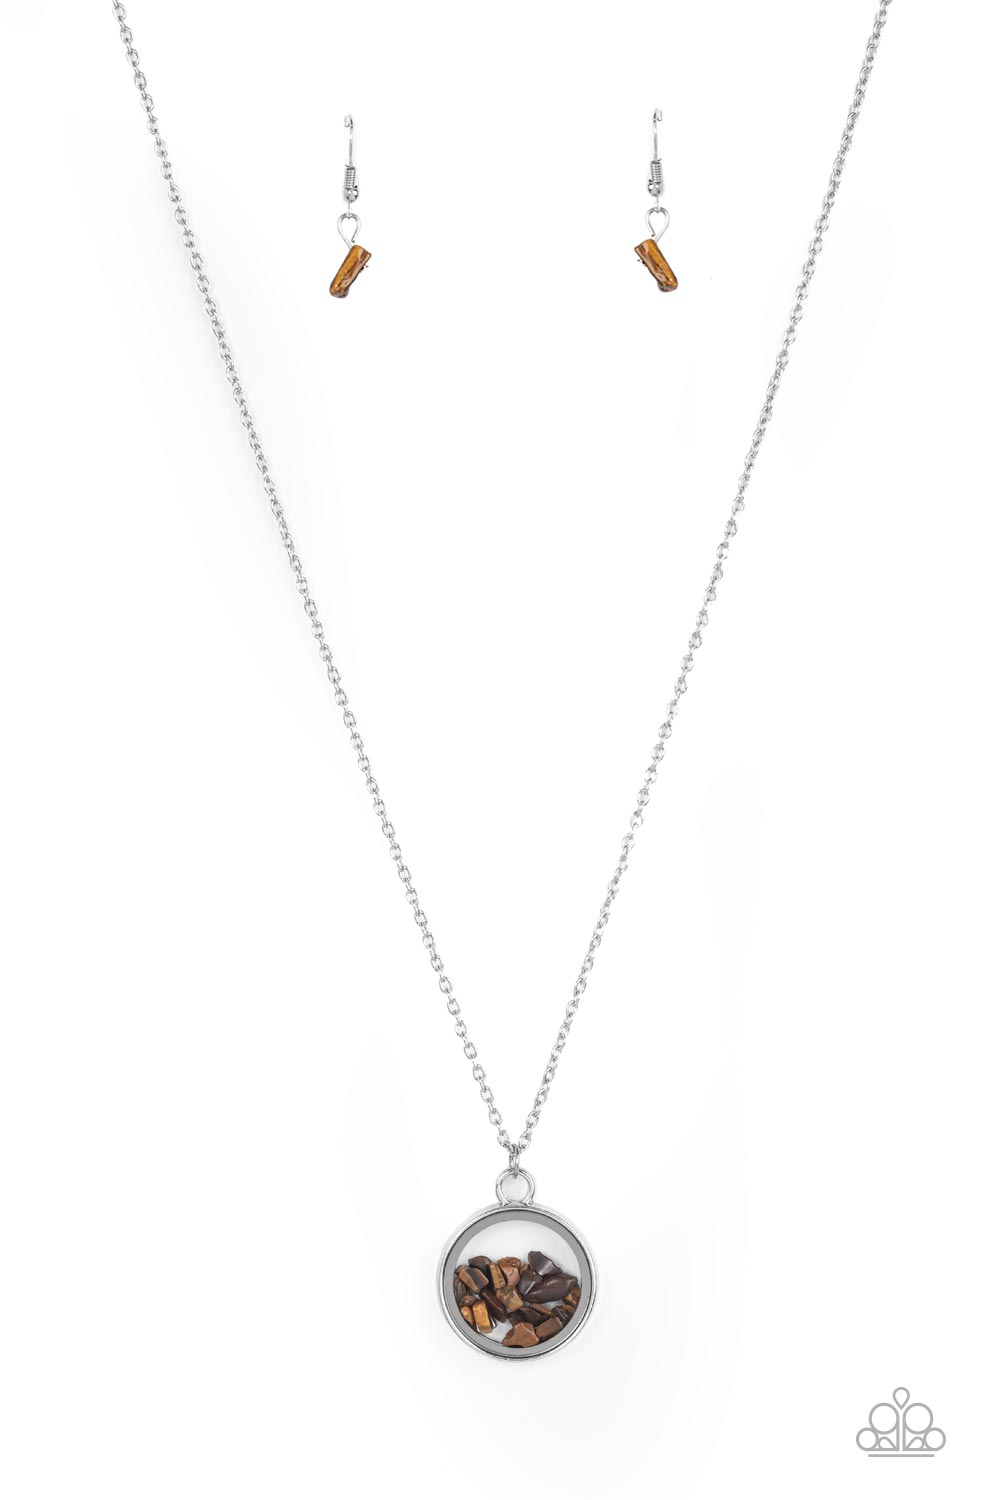 Gemstone Guru Paparazzi Accessories Necklace with Earrings Brown